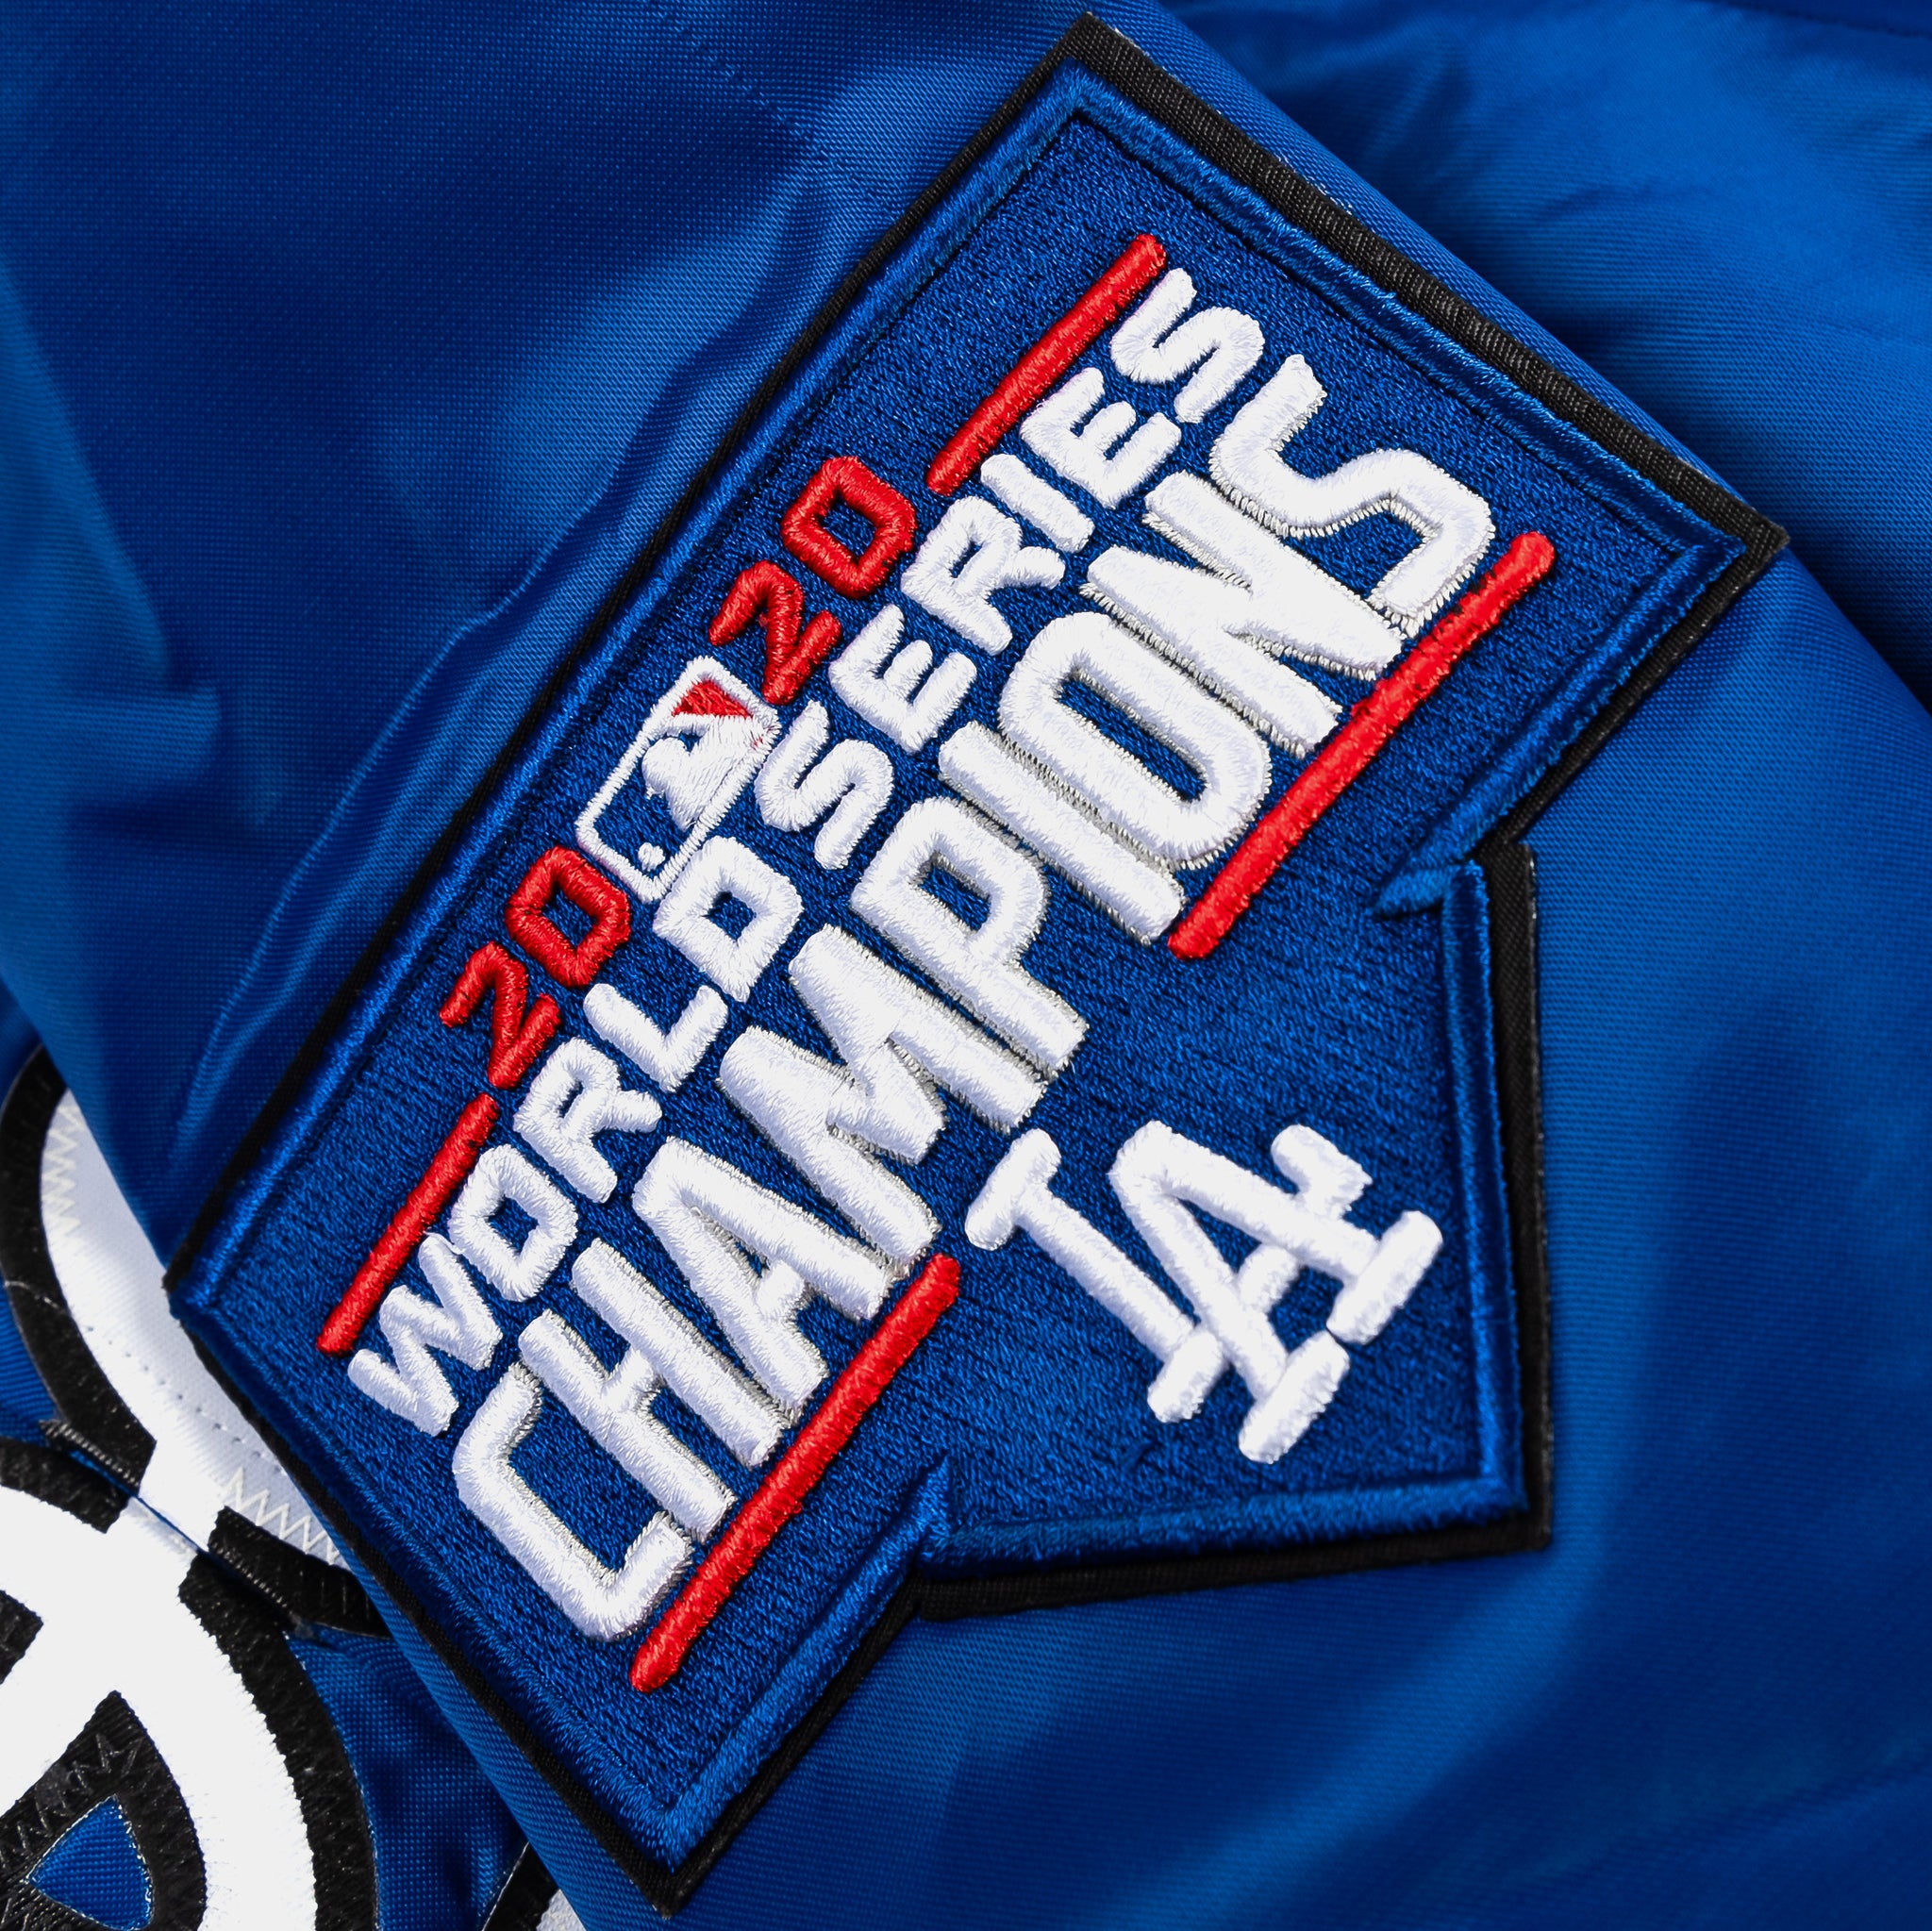 Los Angeles Dodgers 2020 World Series Champions Satin Mens Jacket  (White/Blue)